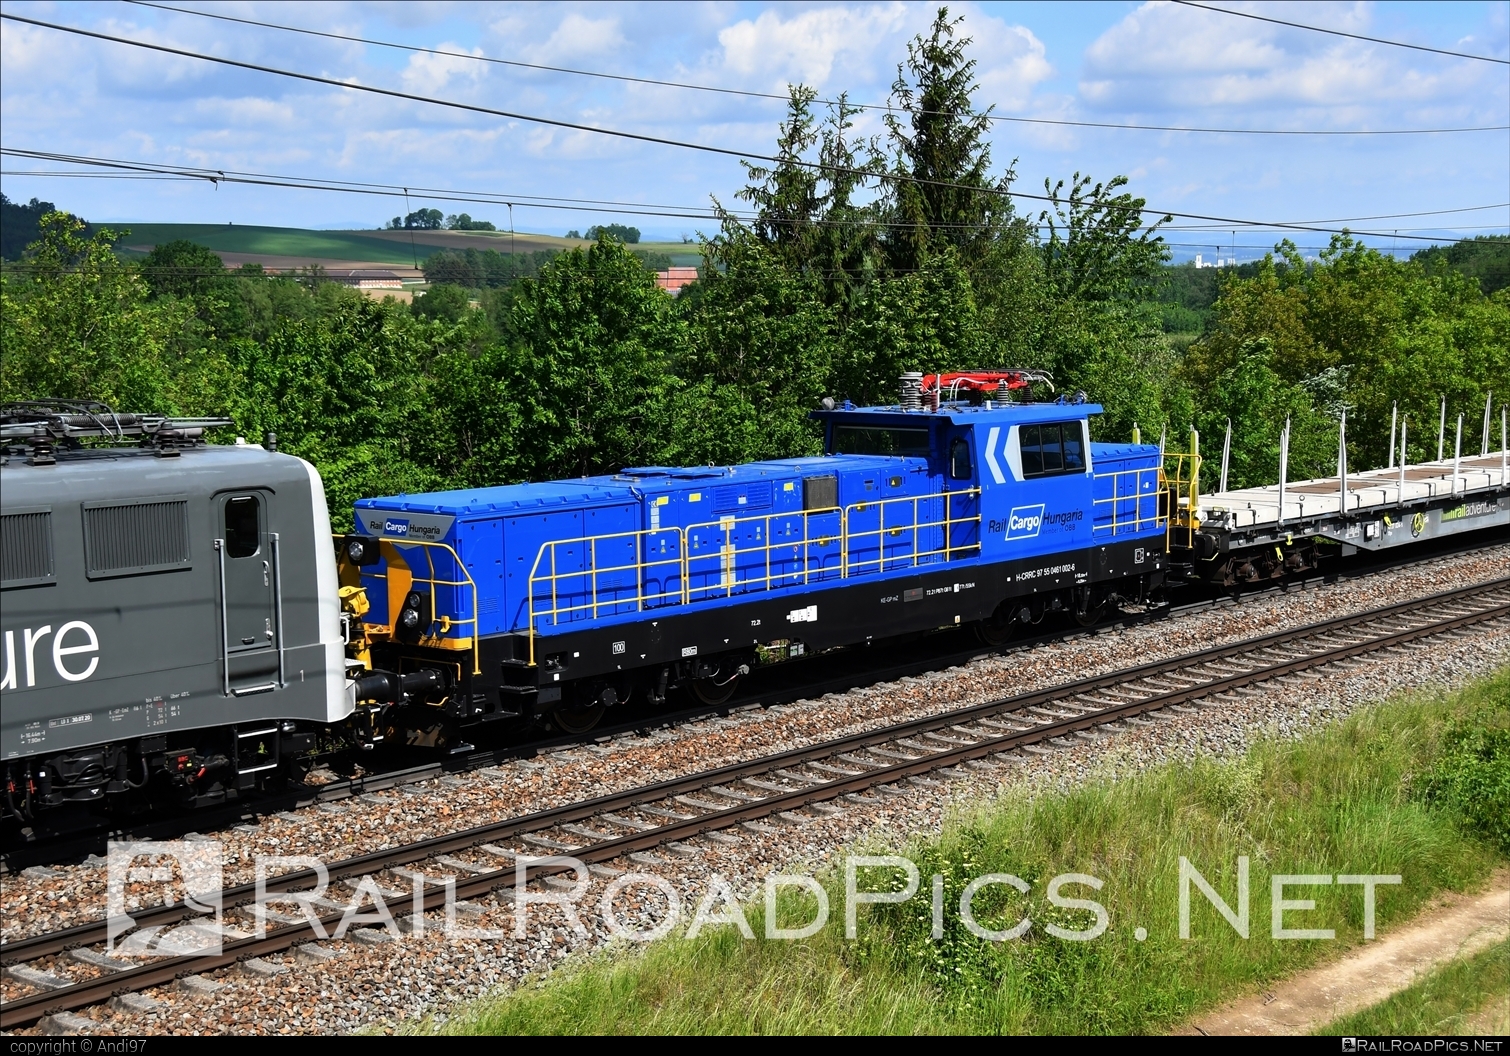 CRRC ZELC CHA1B1 Grasshopper - 461 002 operated by Rail Cargo Hungaria ZRt. #crrc #crrcZelc #crrcZelcCha1b1 #crrcZelcGrasshopper #crrcZelcVerkehrstechnikGmbh #crrcZhuzhou #grasshopper #radve #railadventure #rch #rchClass461